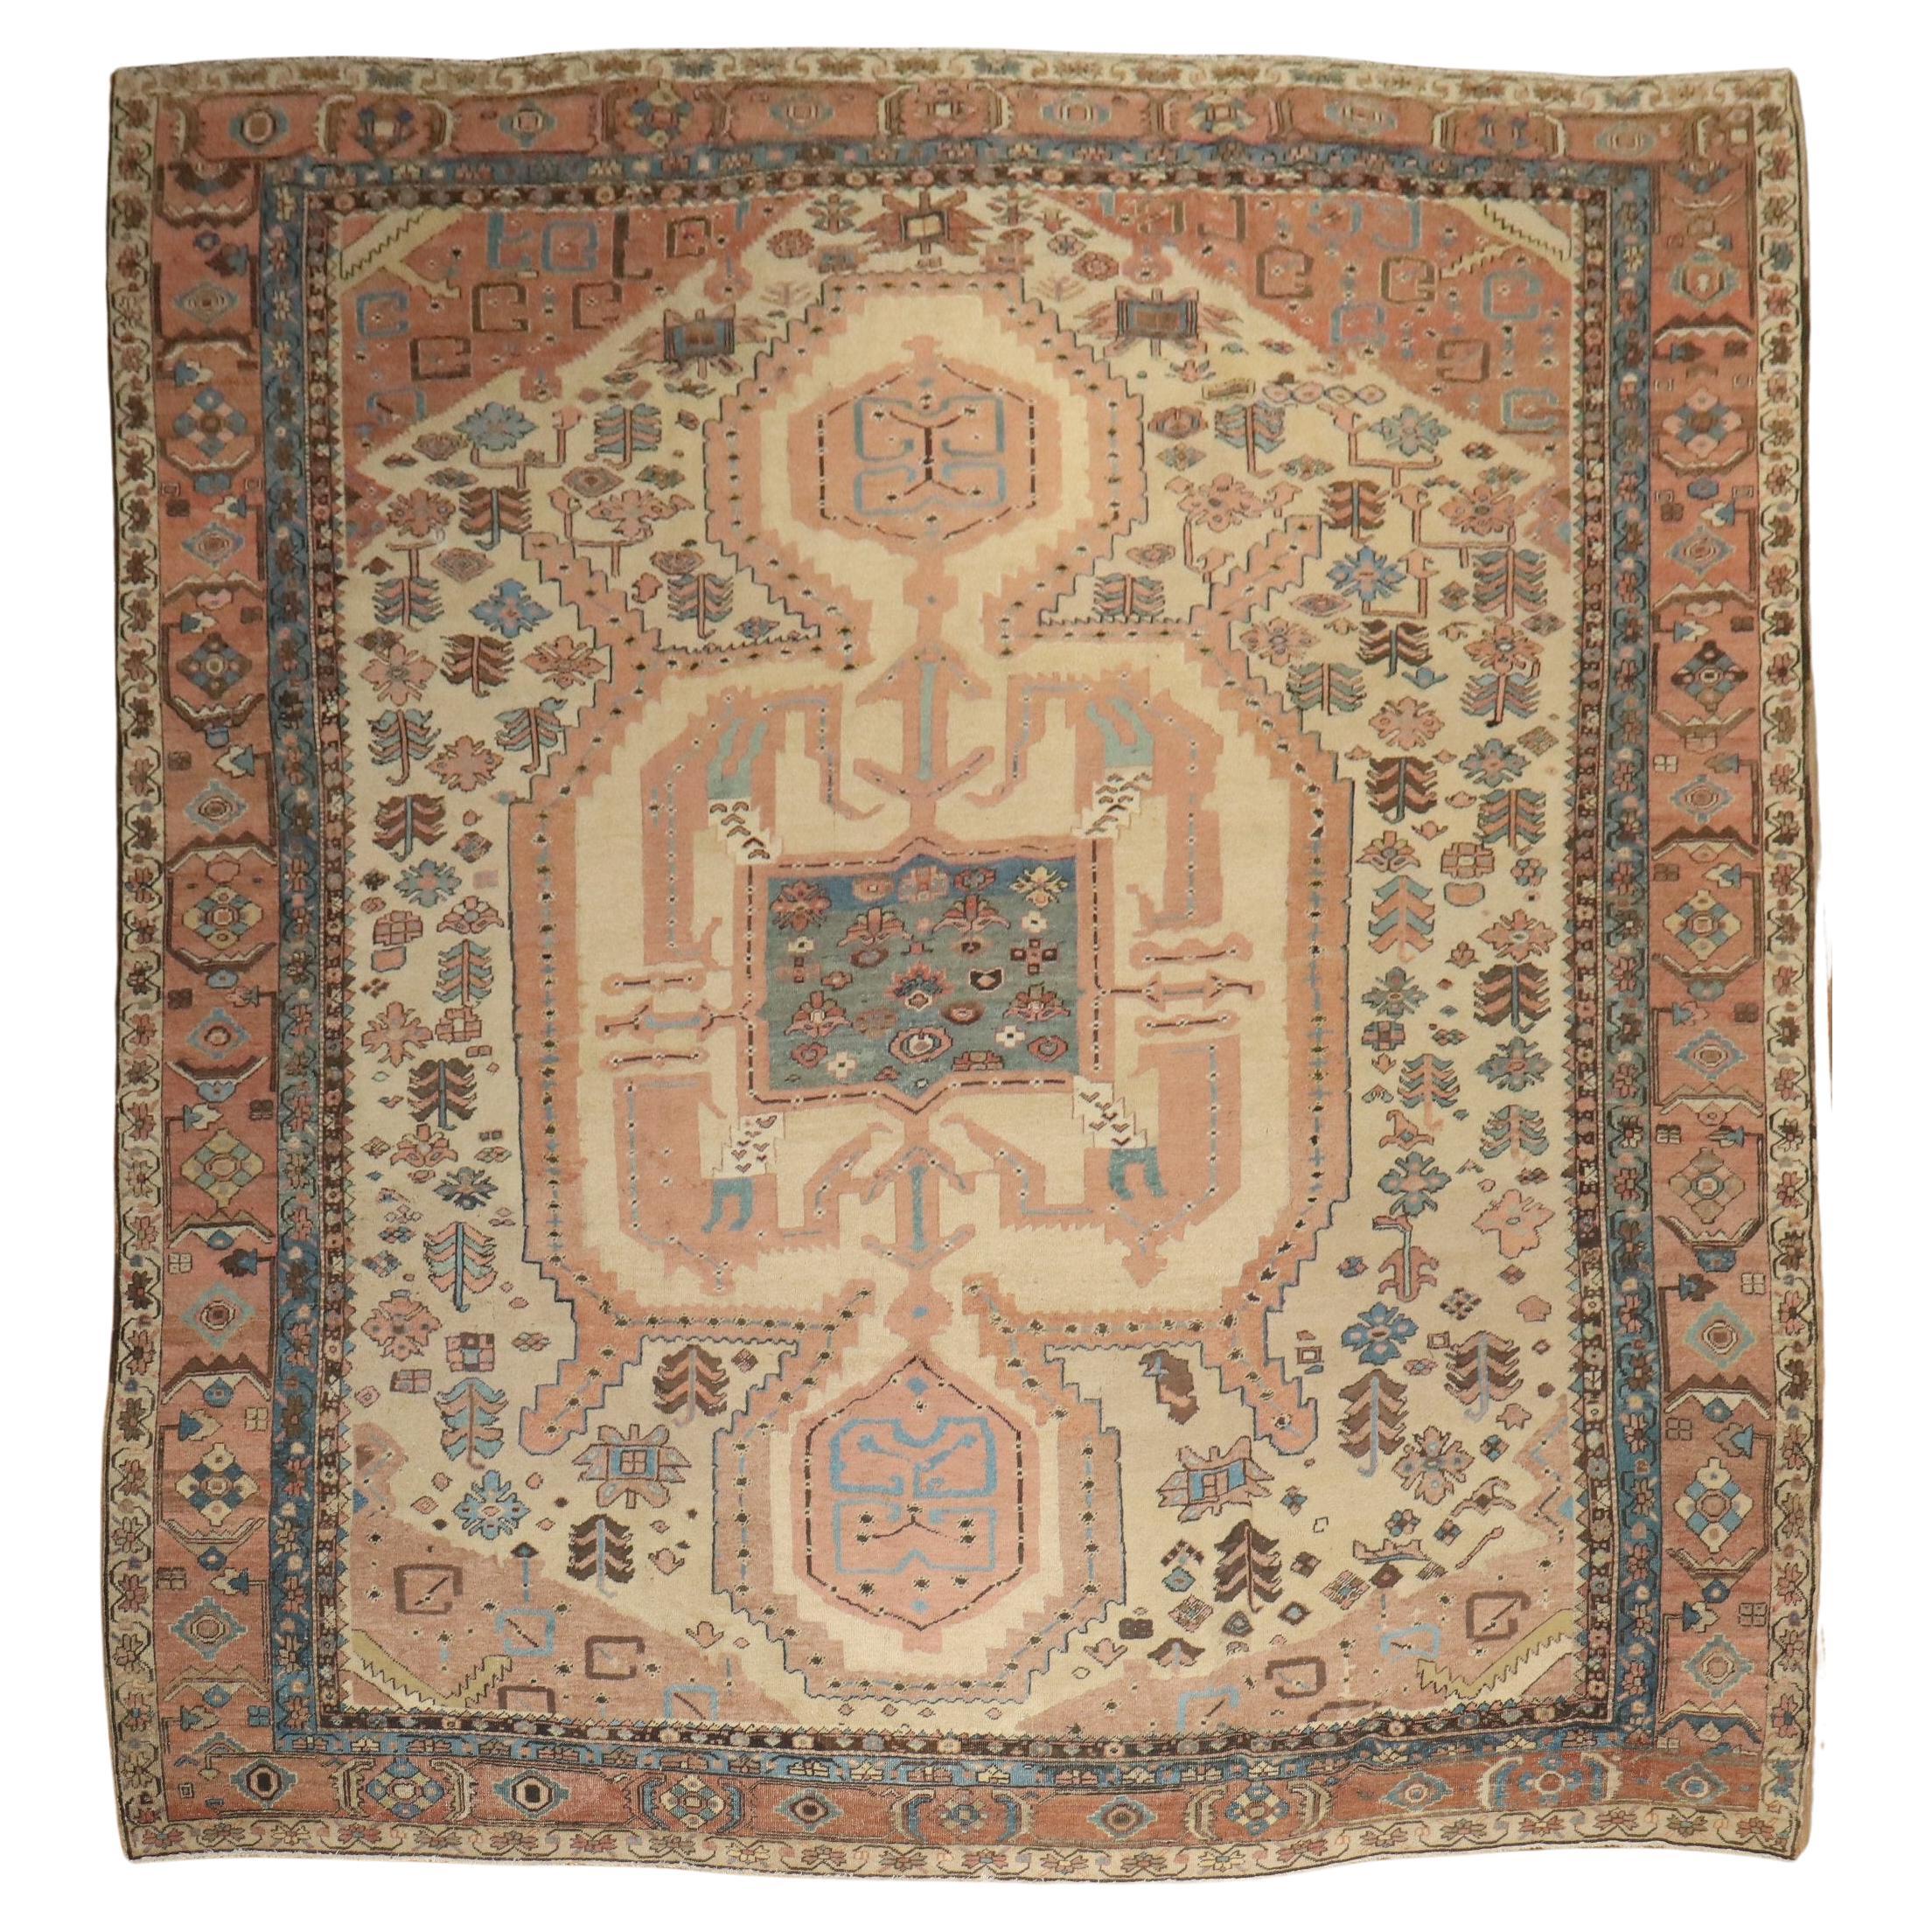 Dekorativer antiker persischer Bakshaish-Teppich der Zabihi-Kollektion